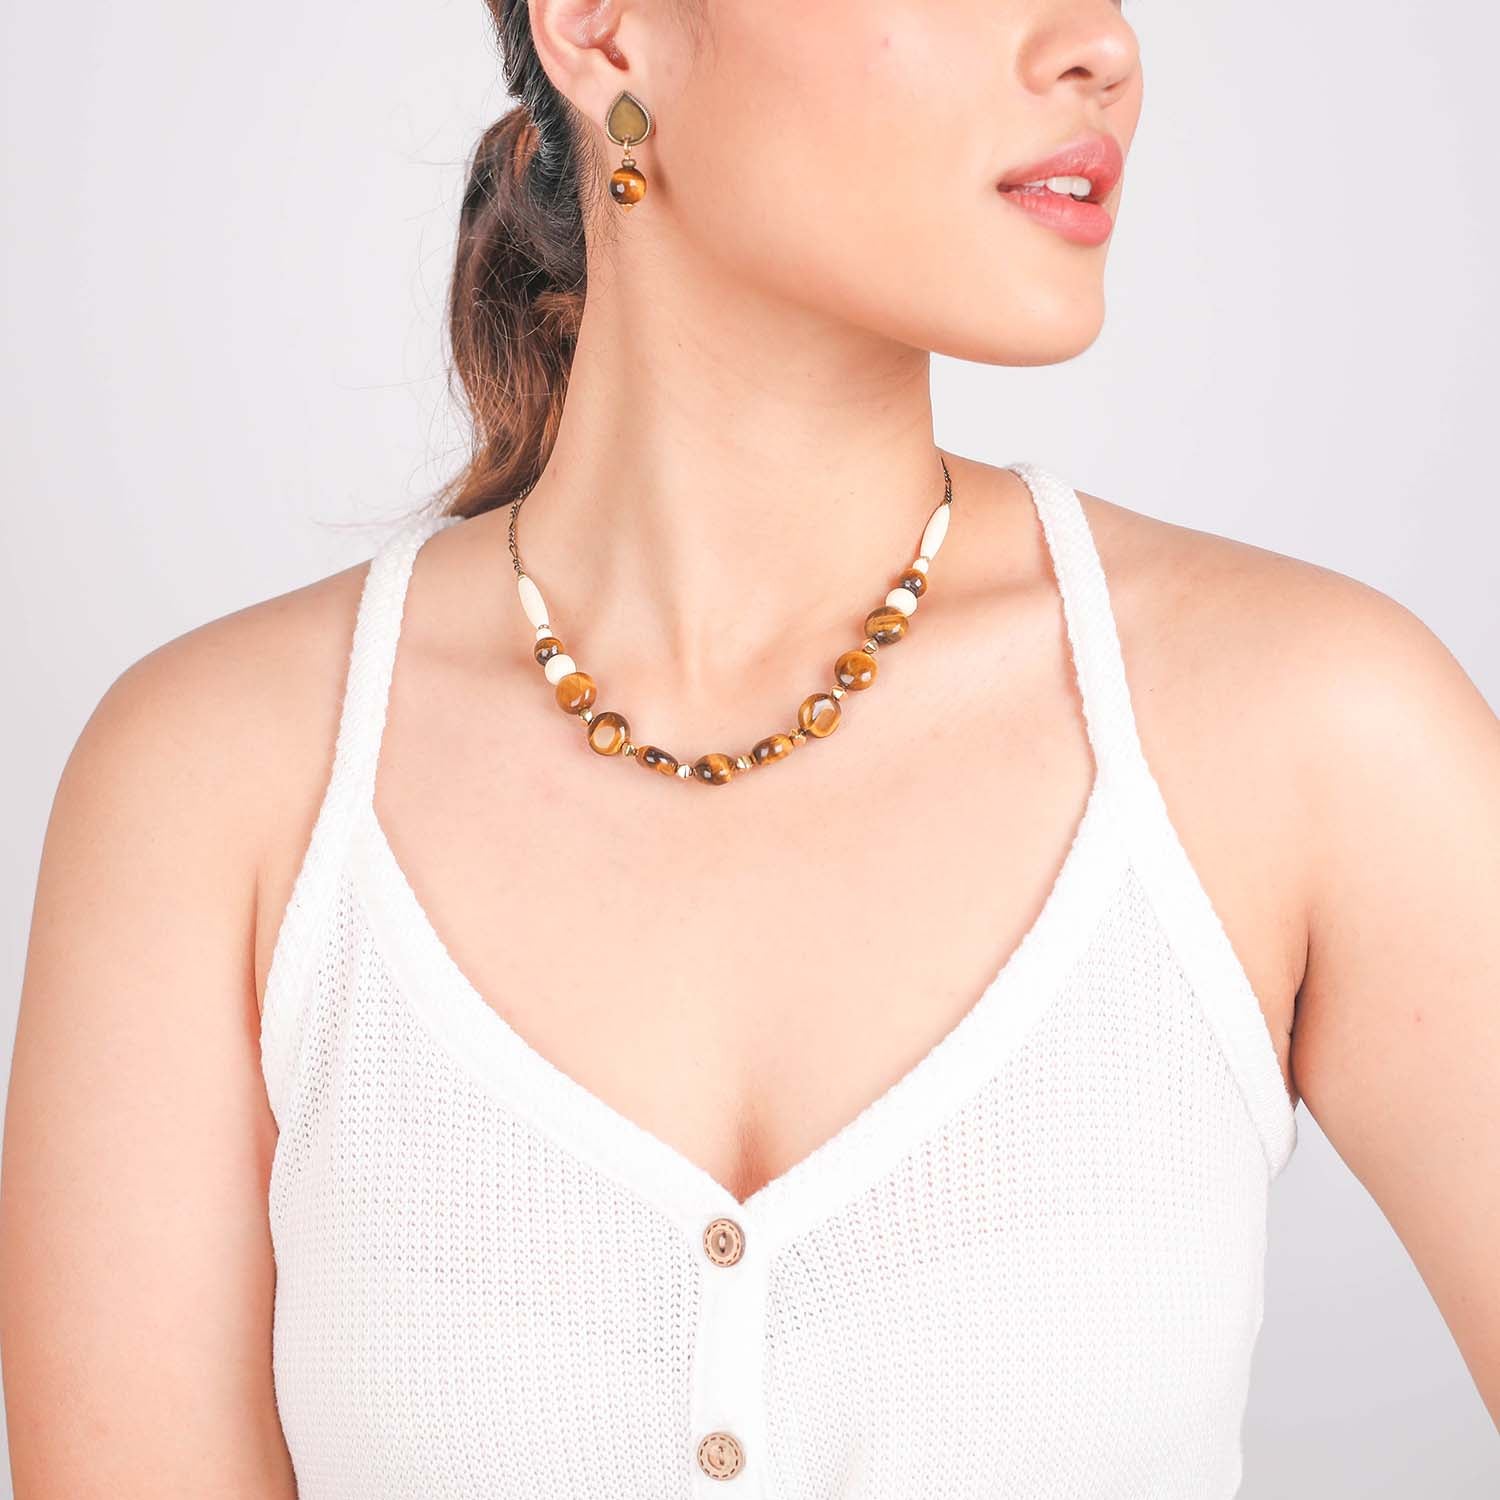 Nature Bijoux Fashion Short Necklace / Tiger Eye, Bone, Brass / White, Brown / Natural Stone / Varanasi - 0